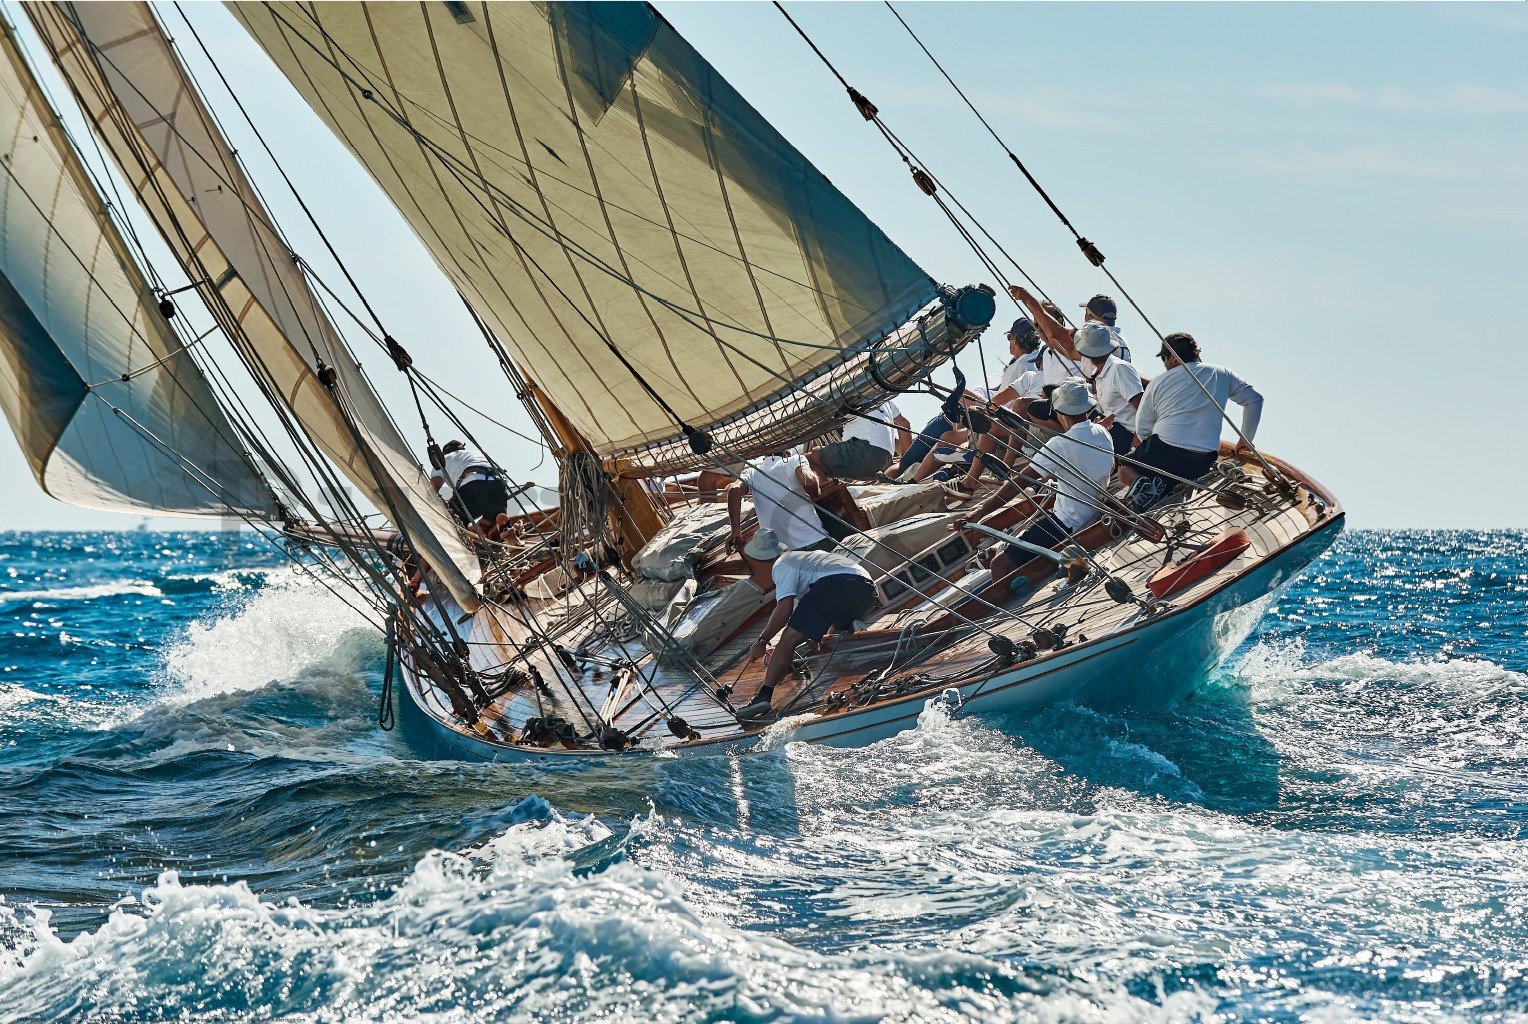 Poster: Racing yachting